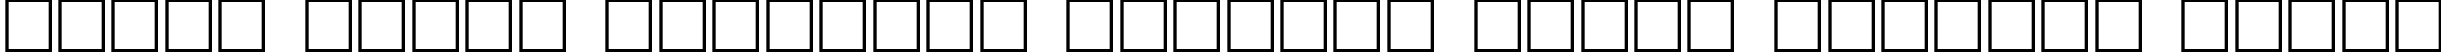 Пример написания шрифтом Symmetric Things 2 текста на белорусском